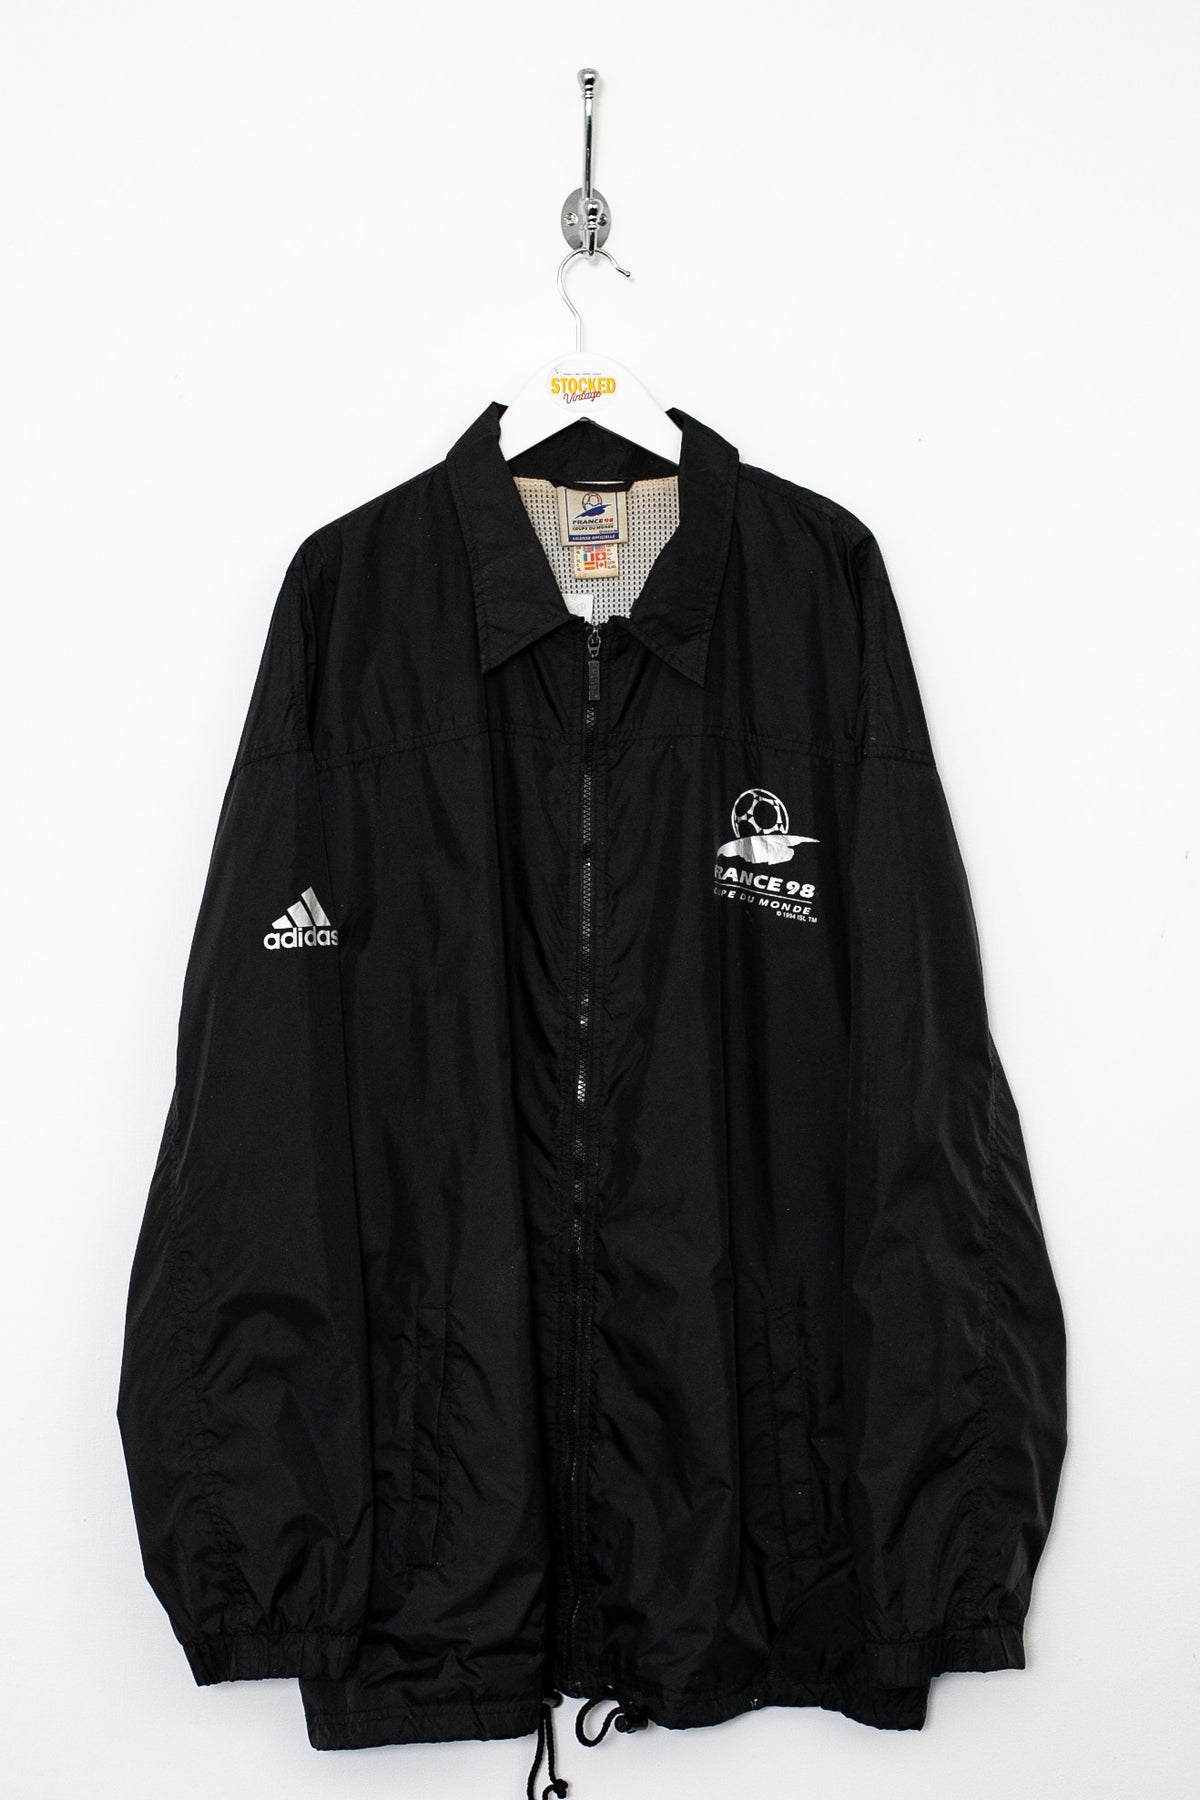 1998 Adidas France World Cup Jacket (XL)